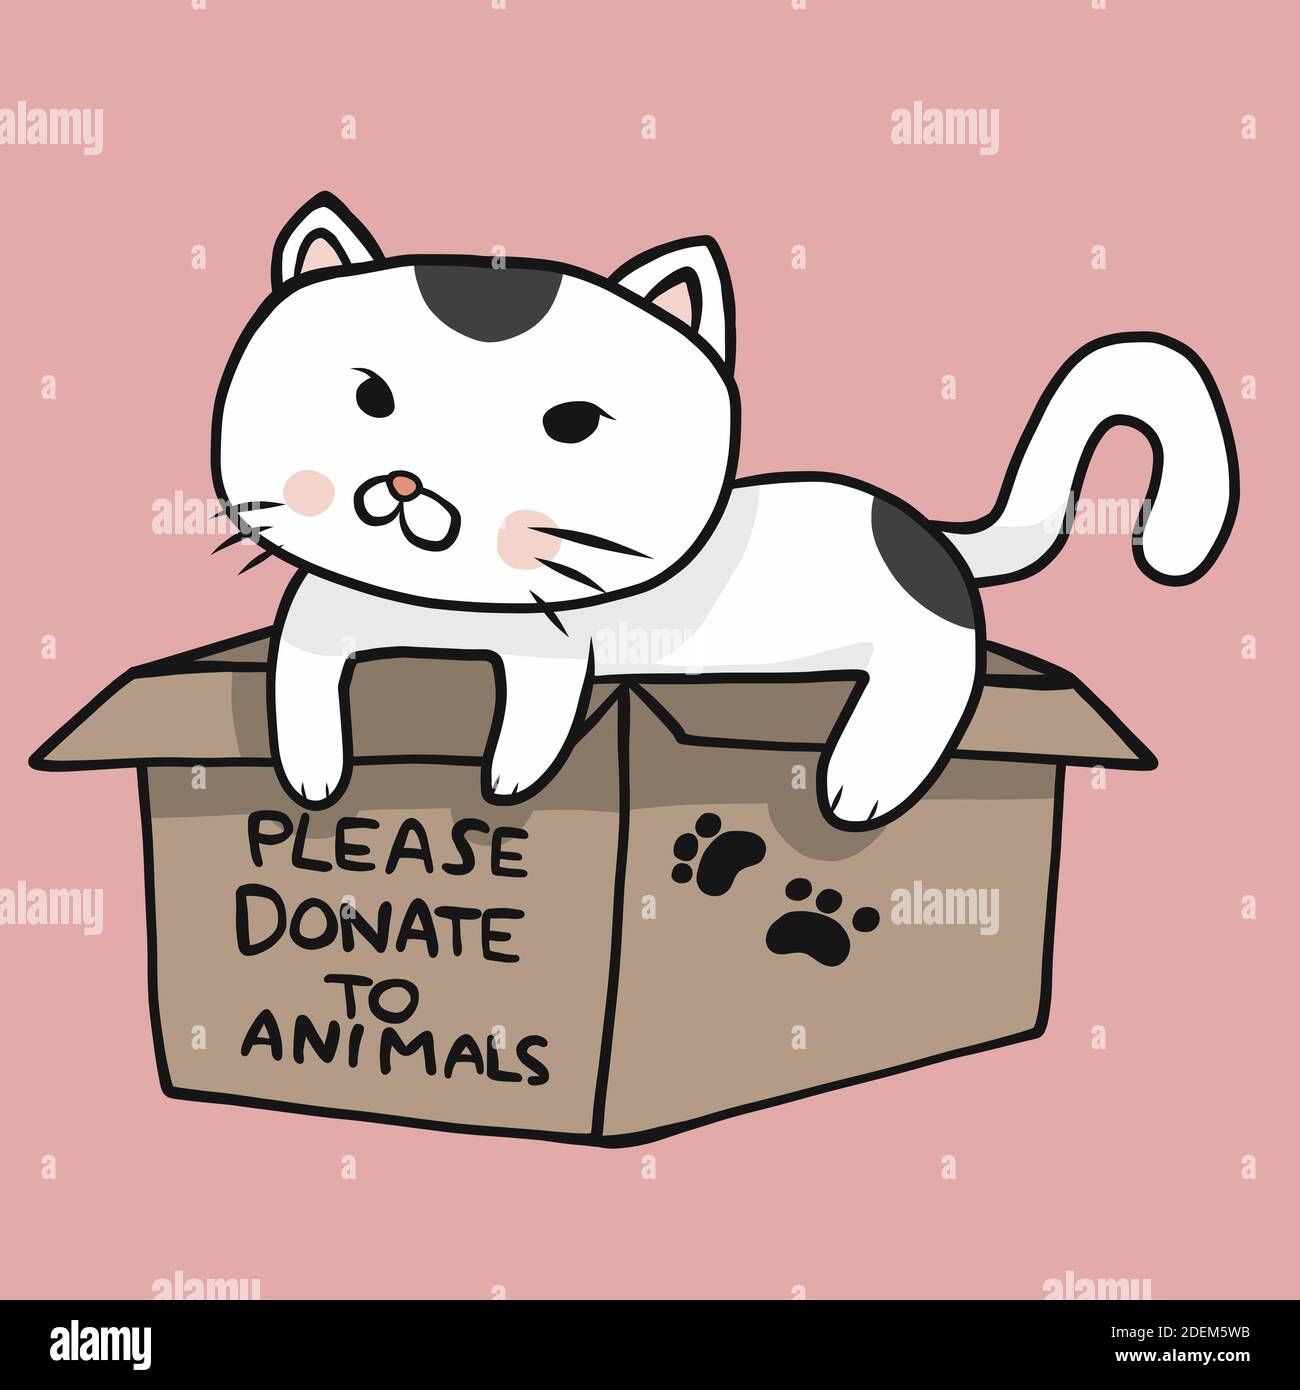 Плиз донат головоломка. Плиз донат. Вектор животные в коробке. Плиз донат кошки. PLAS donate картинка.